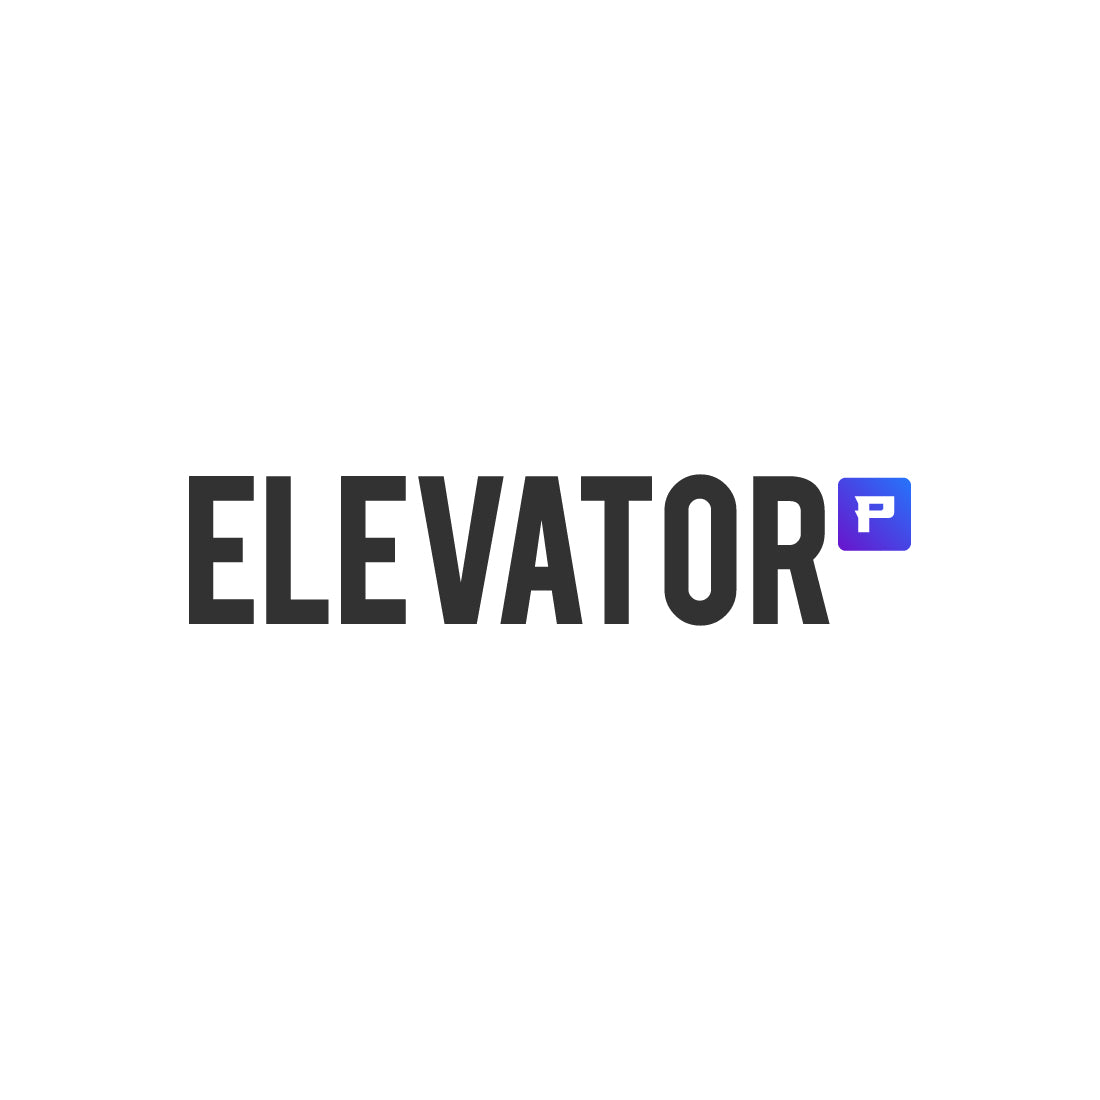 ELEVATOR Promotions